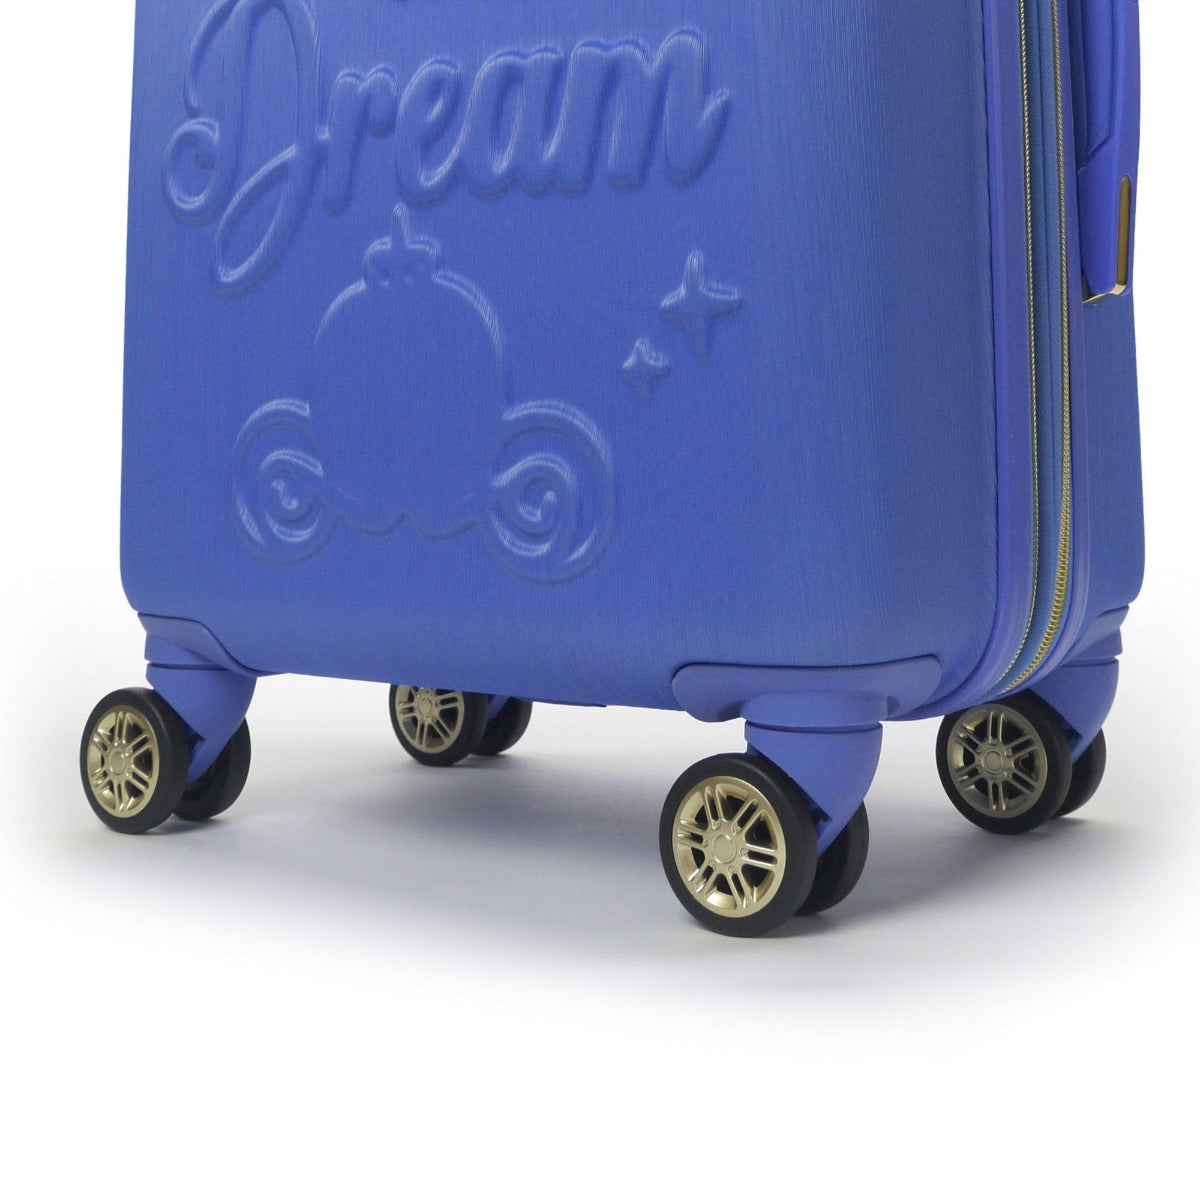 FŪL Disney Princess Cinderella hard sided 22" carry on luggage 8 spinner wheels